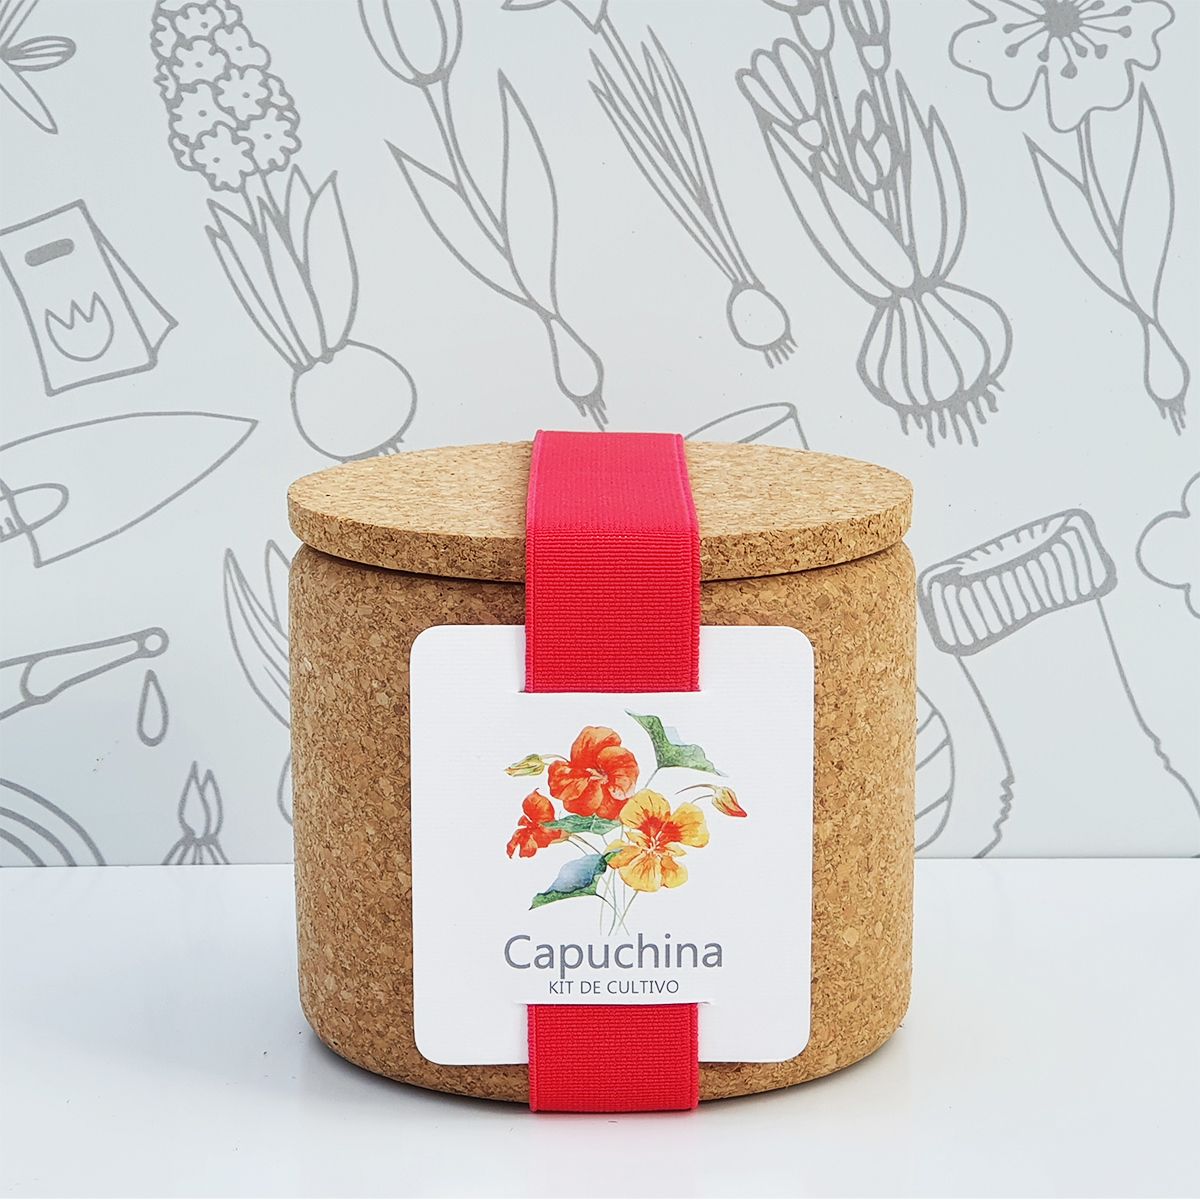 CAPUCHINA CORK -Kit semillas de capuchina en maceta de c